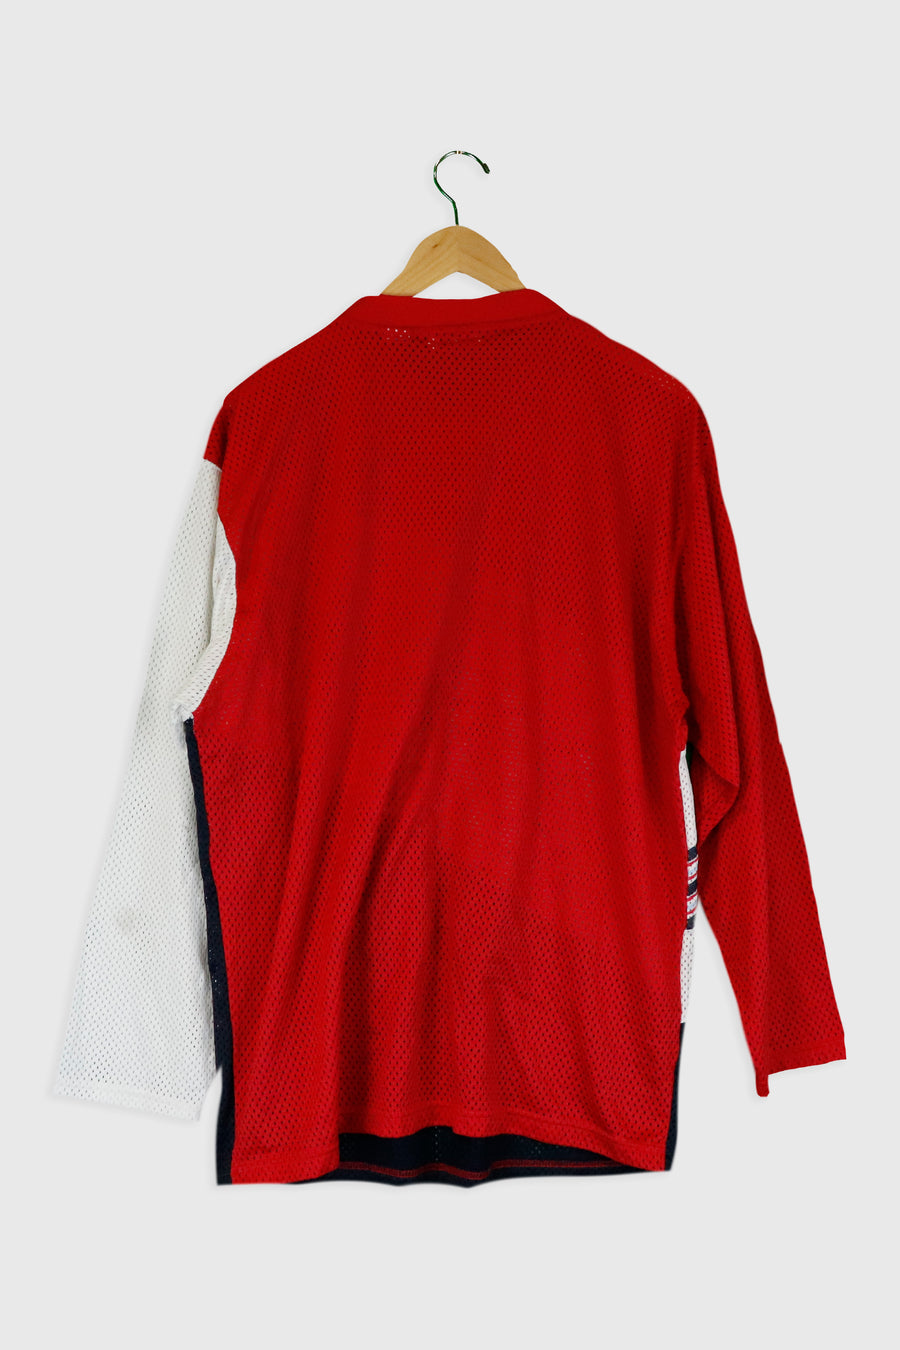 Vintage Fila Mesh Tricoloured Long Sleeve Jersey Sz L